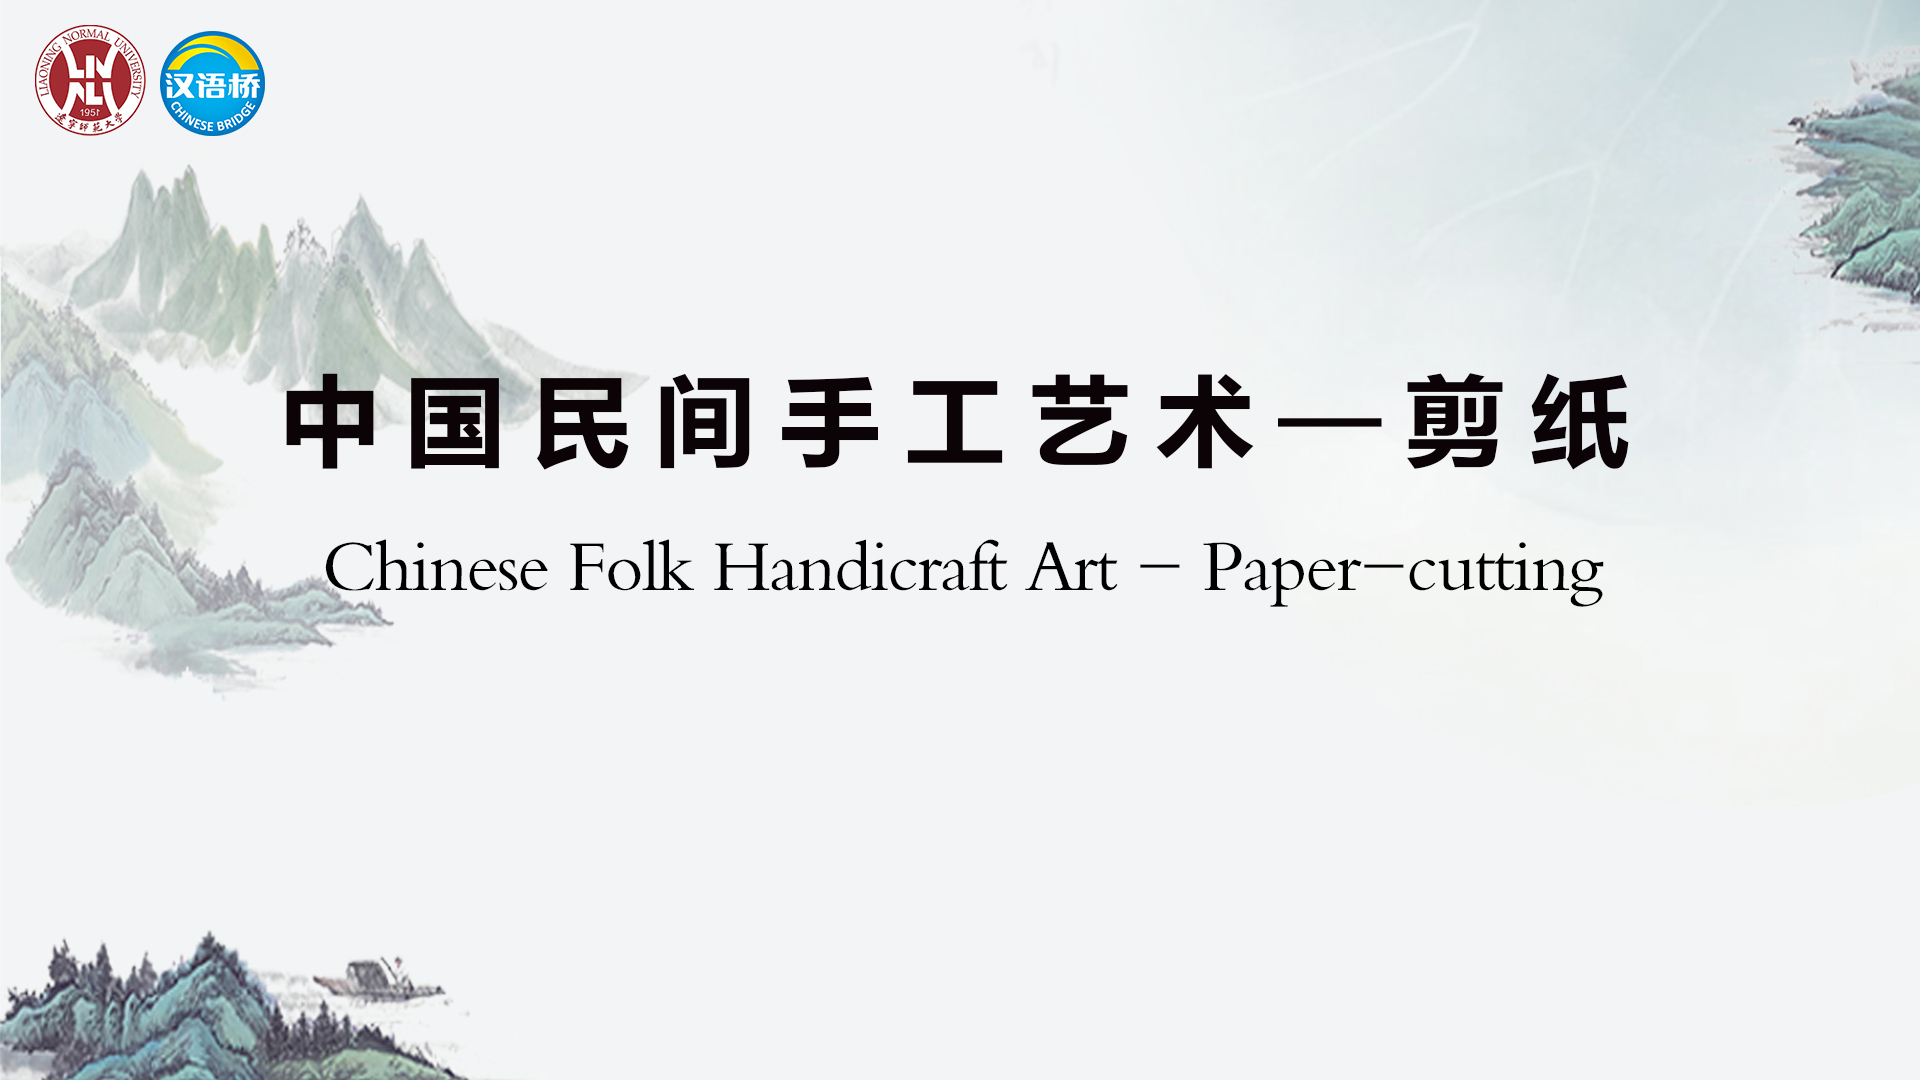 Chinese Folk Handicraft Art -- Paper-cutting